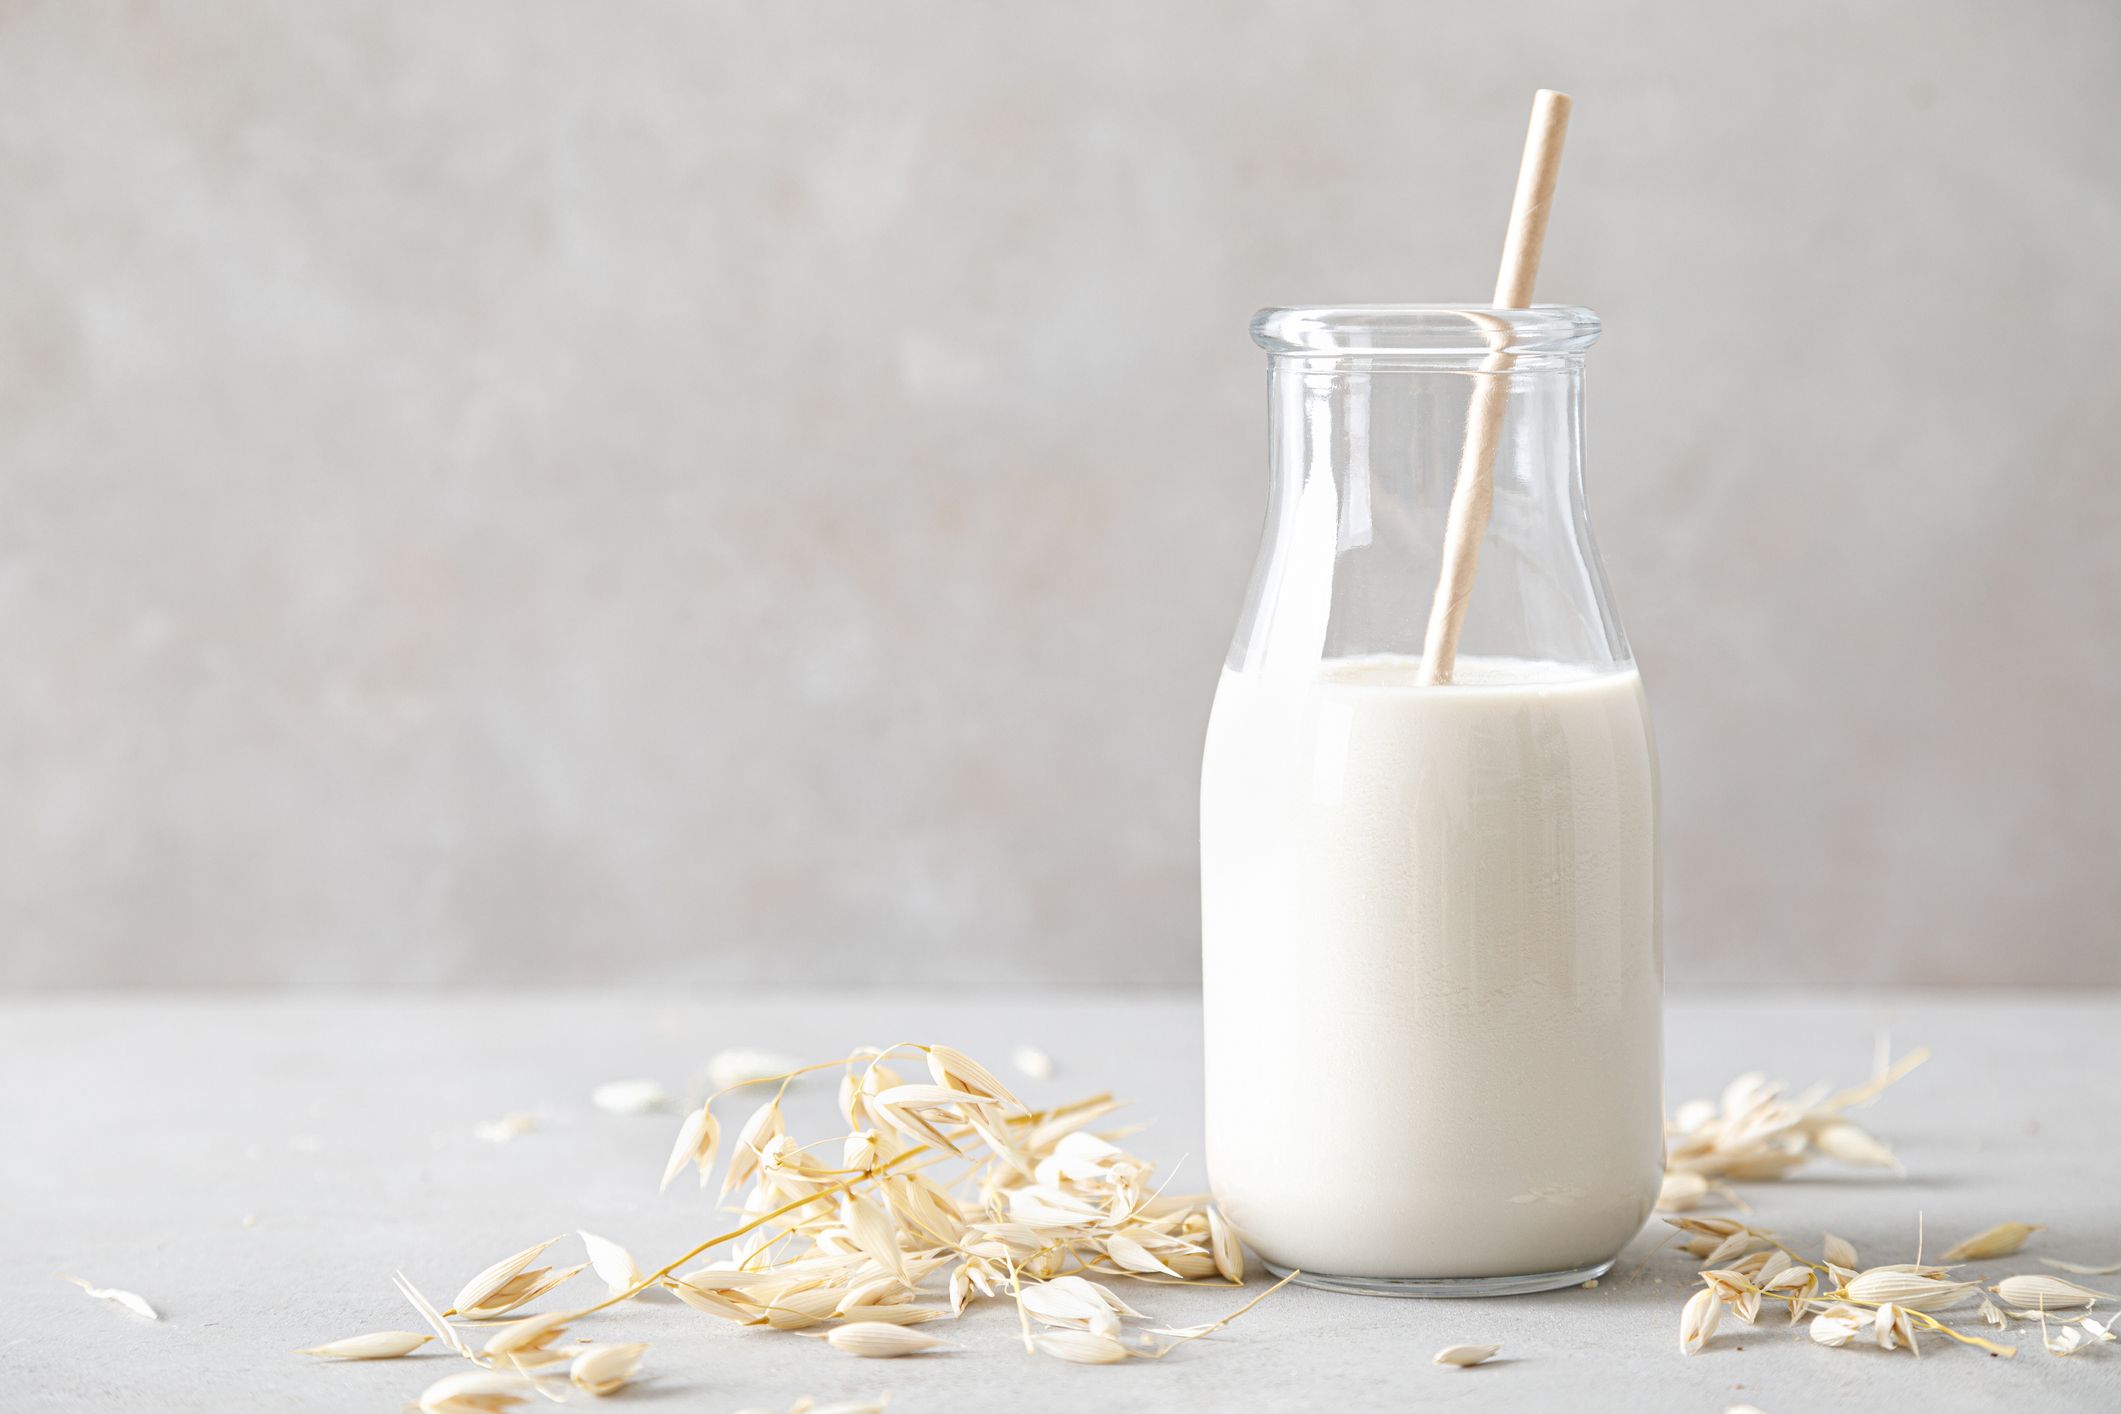 Is Skim Milk Unhealthy? The Surprising Truth!